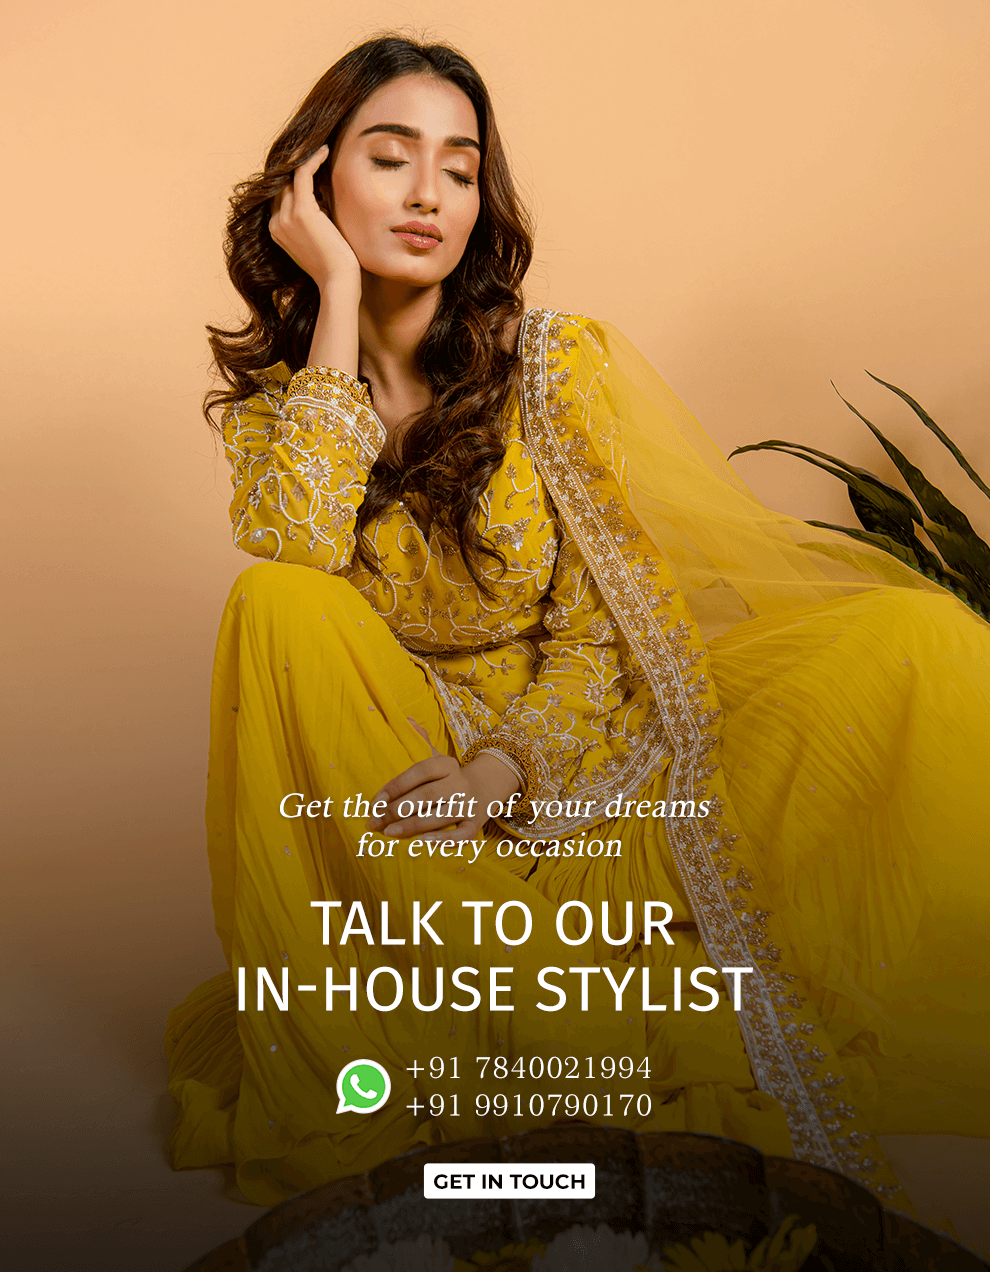 Buy-Yellow-muslin-cotton-churidar-dress-for-women-in-India